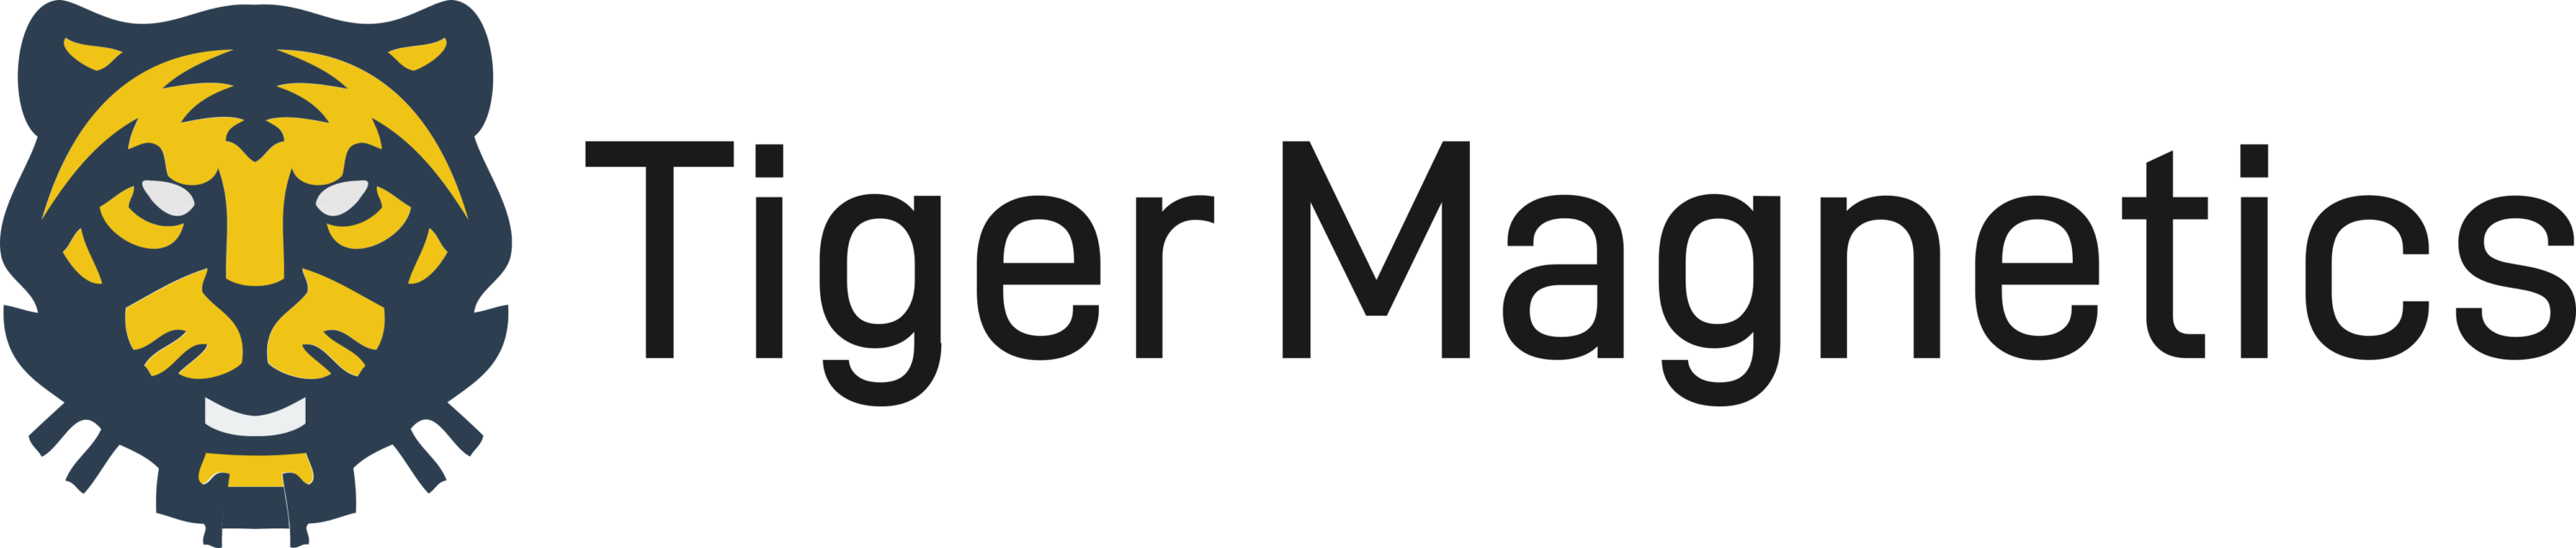 Tiger Magnetics Logo